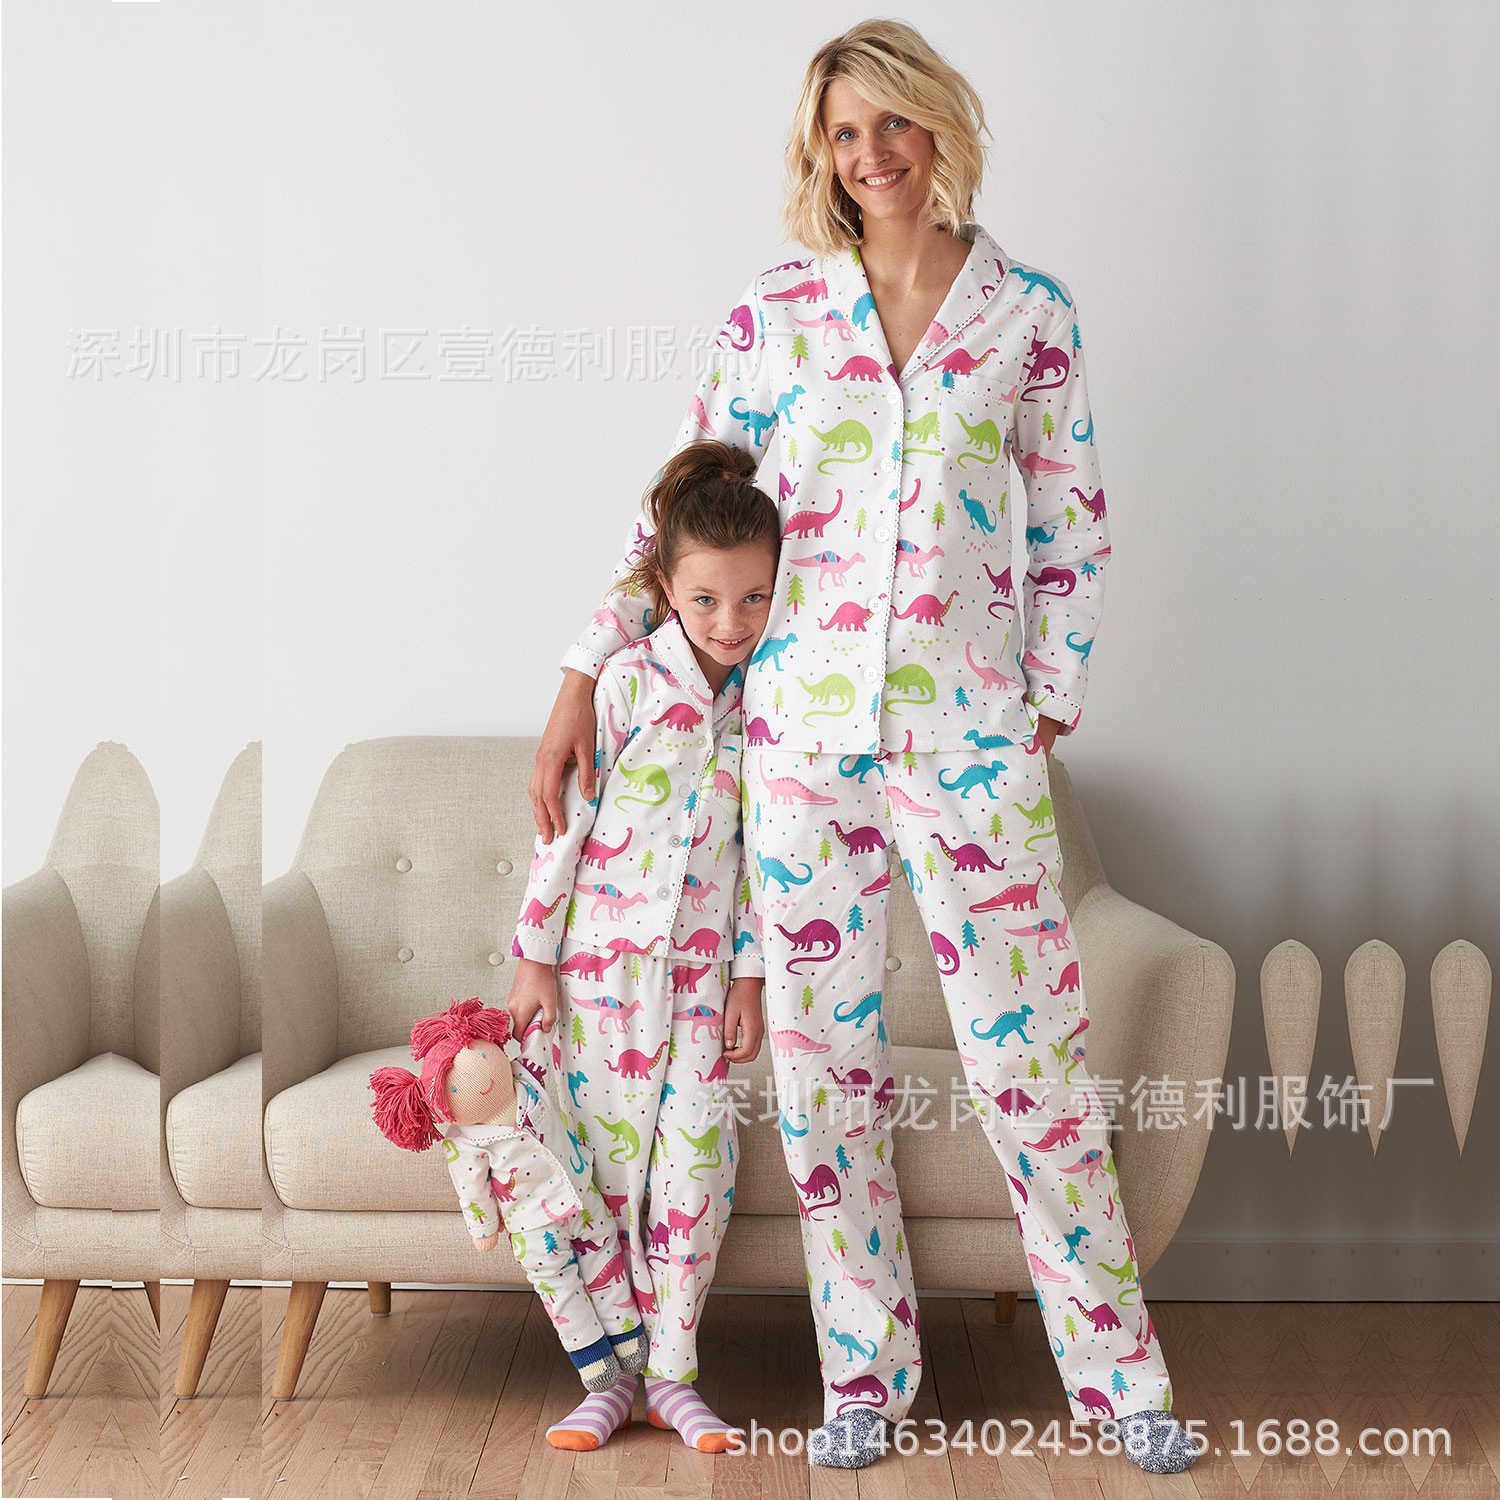 Home Wear Fashion Piyama Baju Tidur Anak Lengan Panjang Motif Kartun Baju Tidur untuk Anak-anak